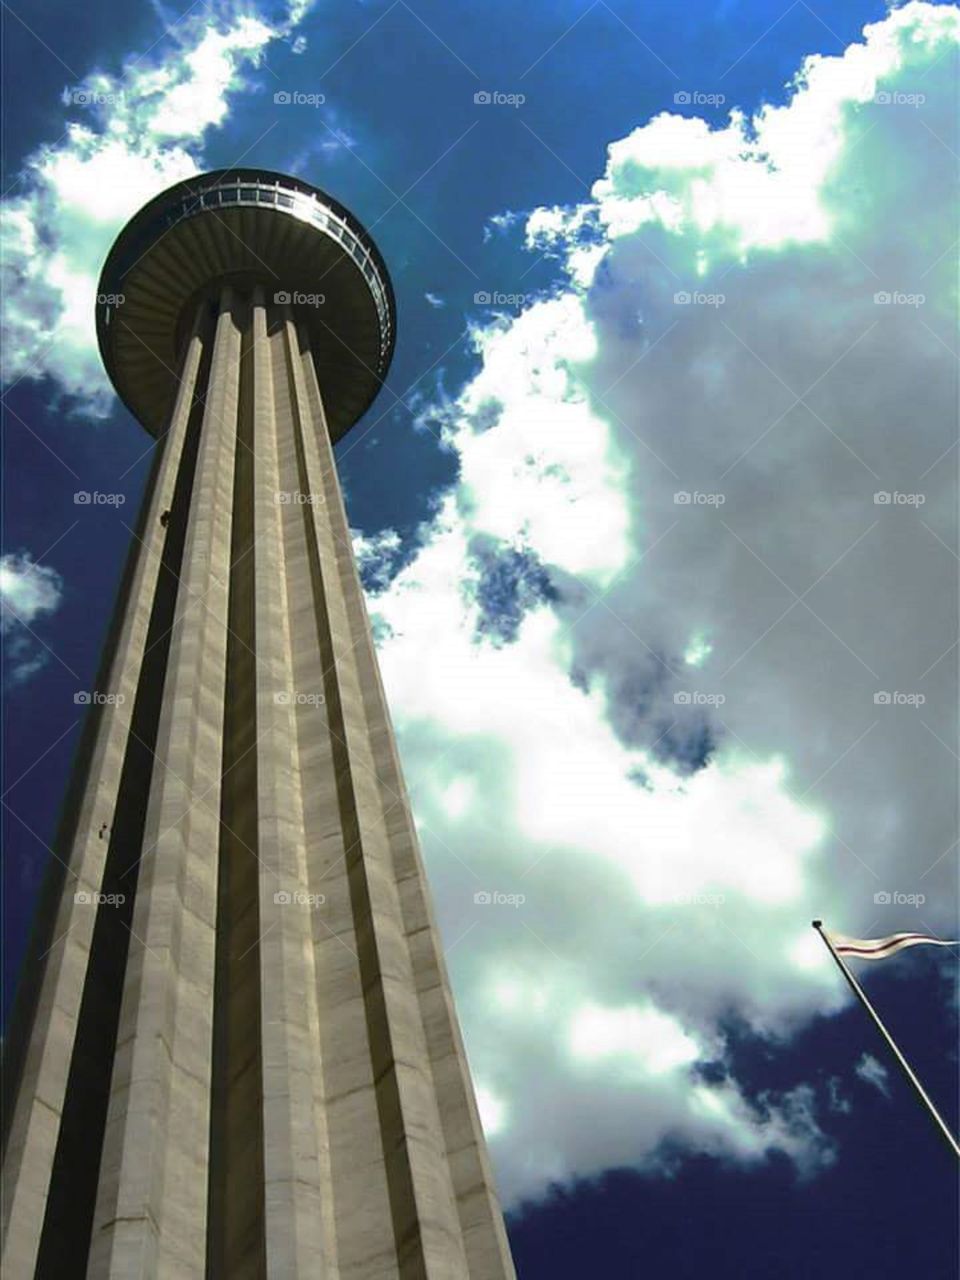 Tower Of The America's, San Antonio, TX